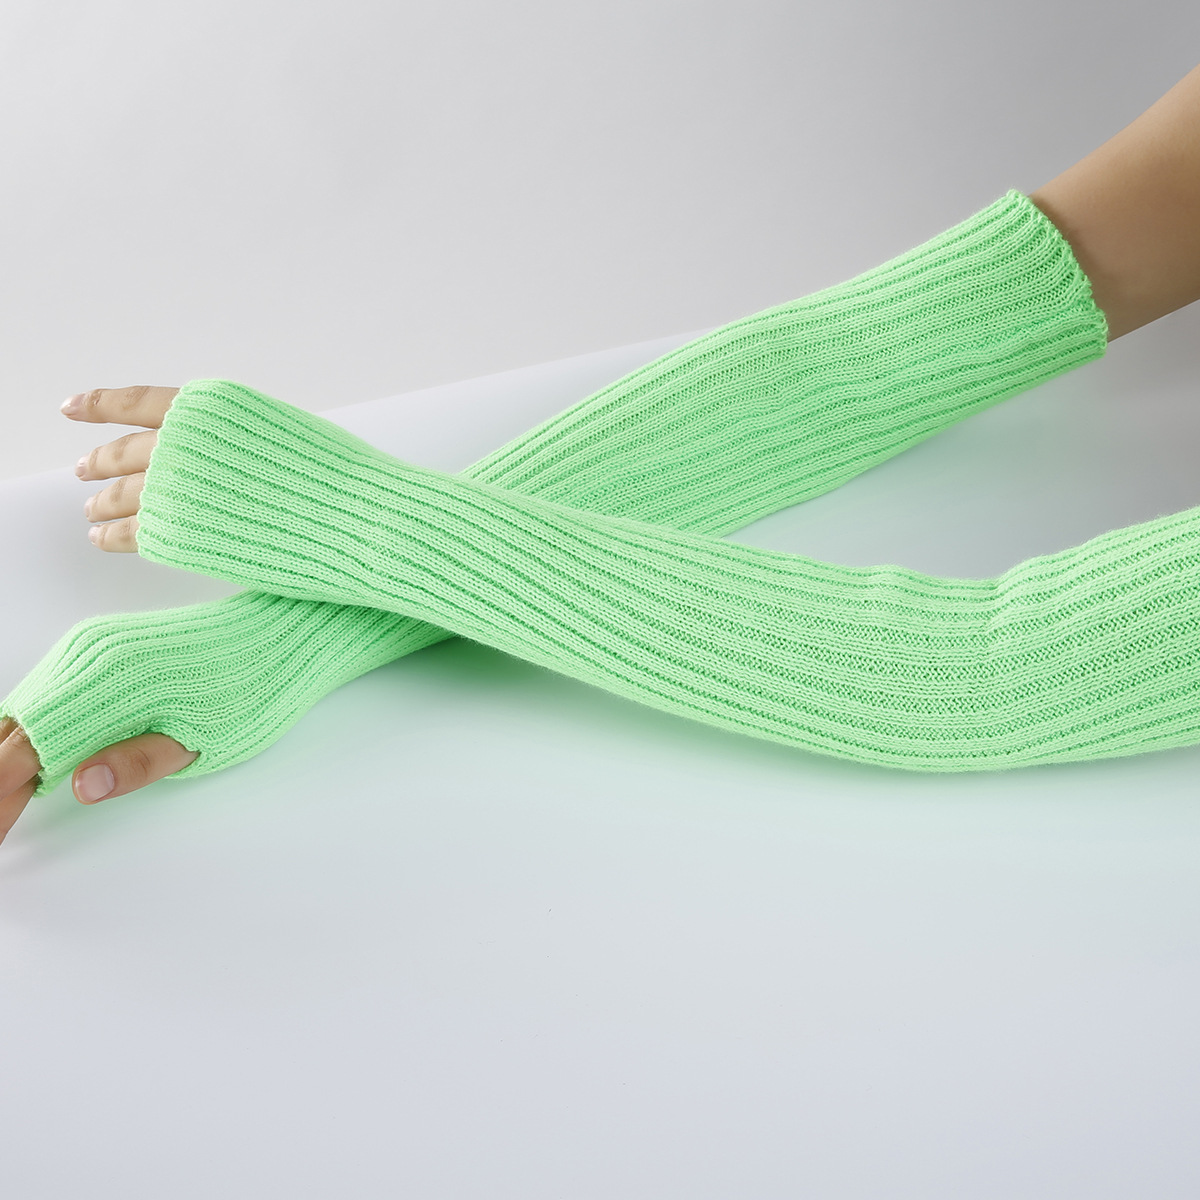 2021 Winter Warm Solid Knit Fingerless Long Gloves Wool Men and Women Hand Crochet Thumbhole Arm Warmers Mittens